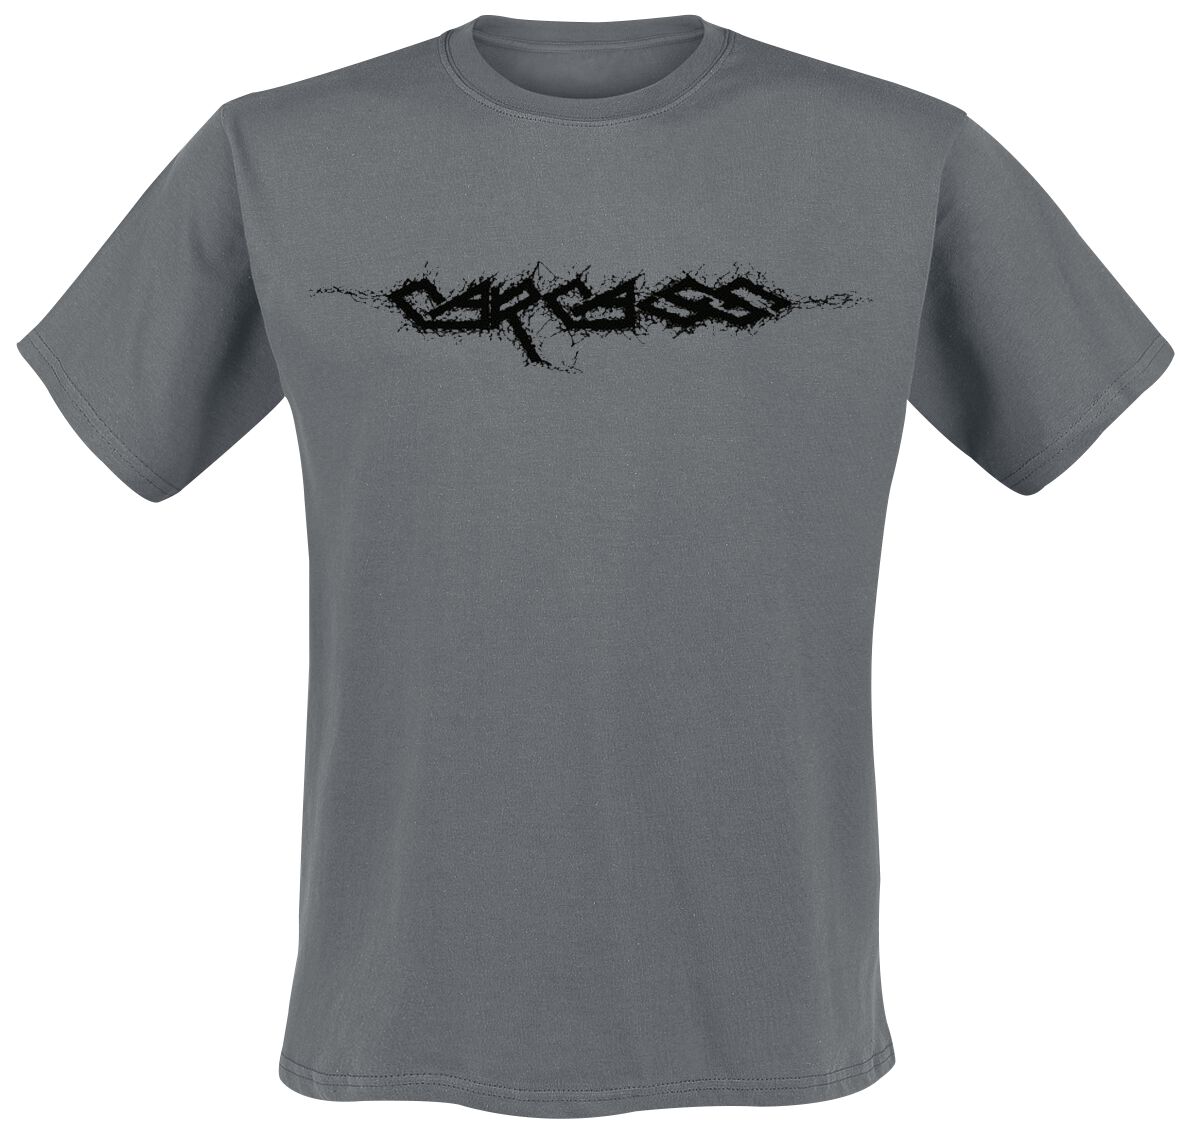 Carcass T-Shirt - Logo - M bis XXL - für Männer - Größe XL - charcoal  - Lizenziertes Merchandise!